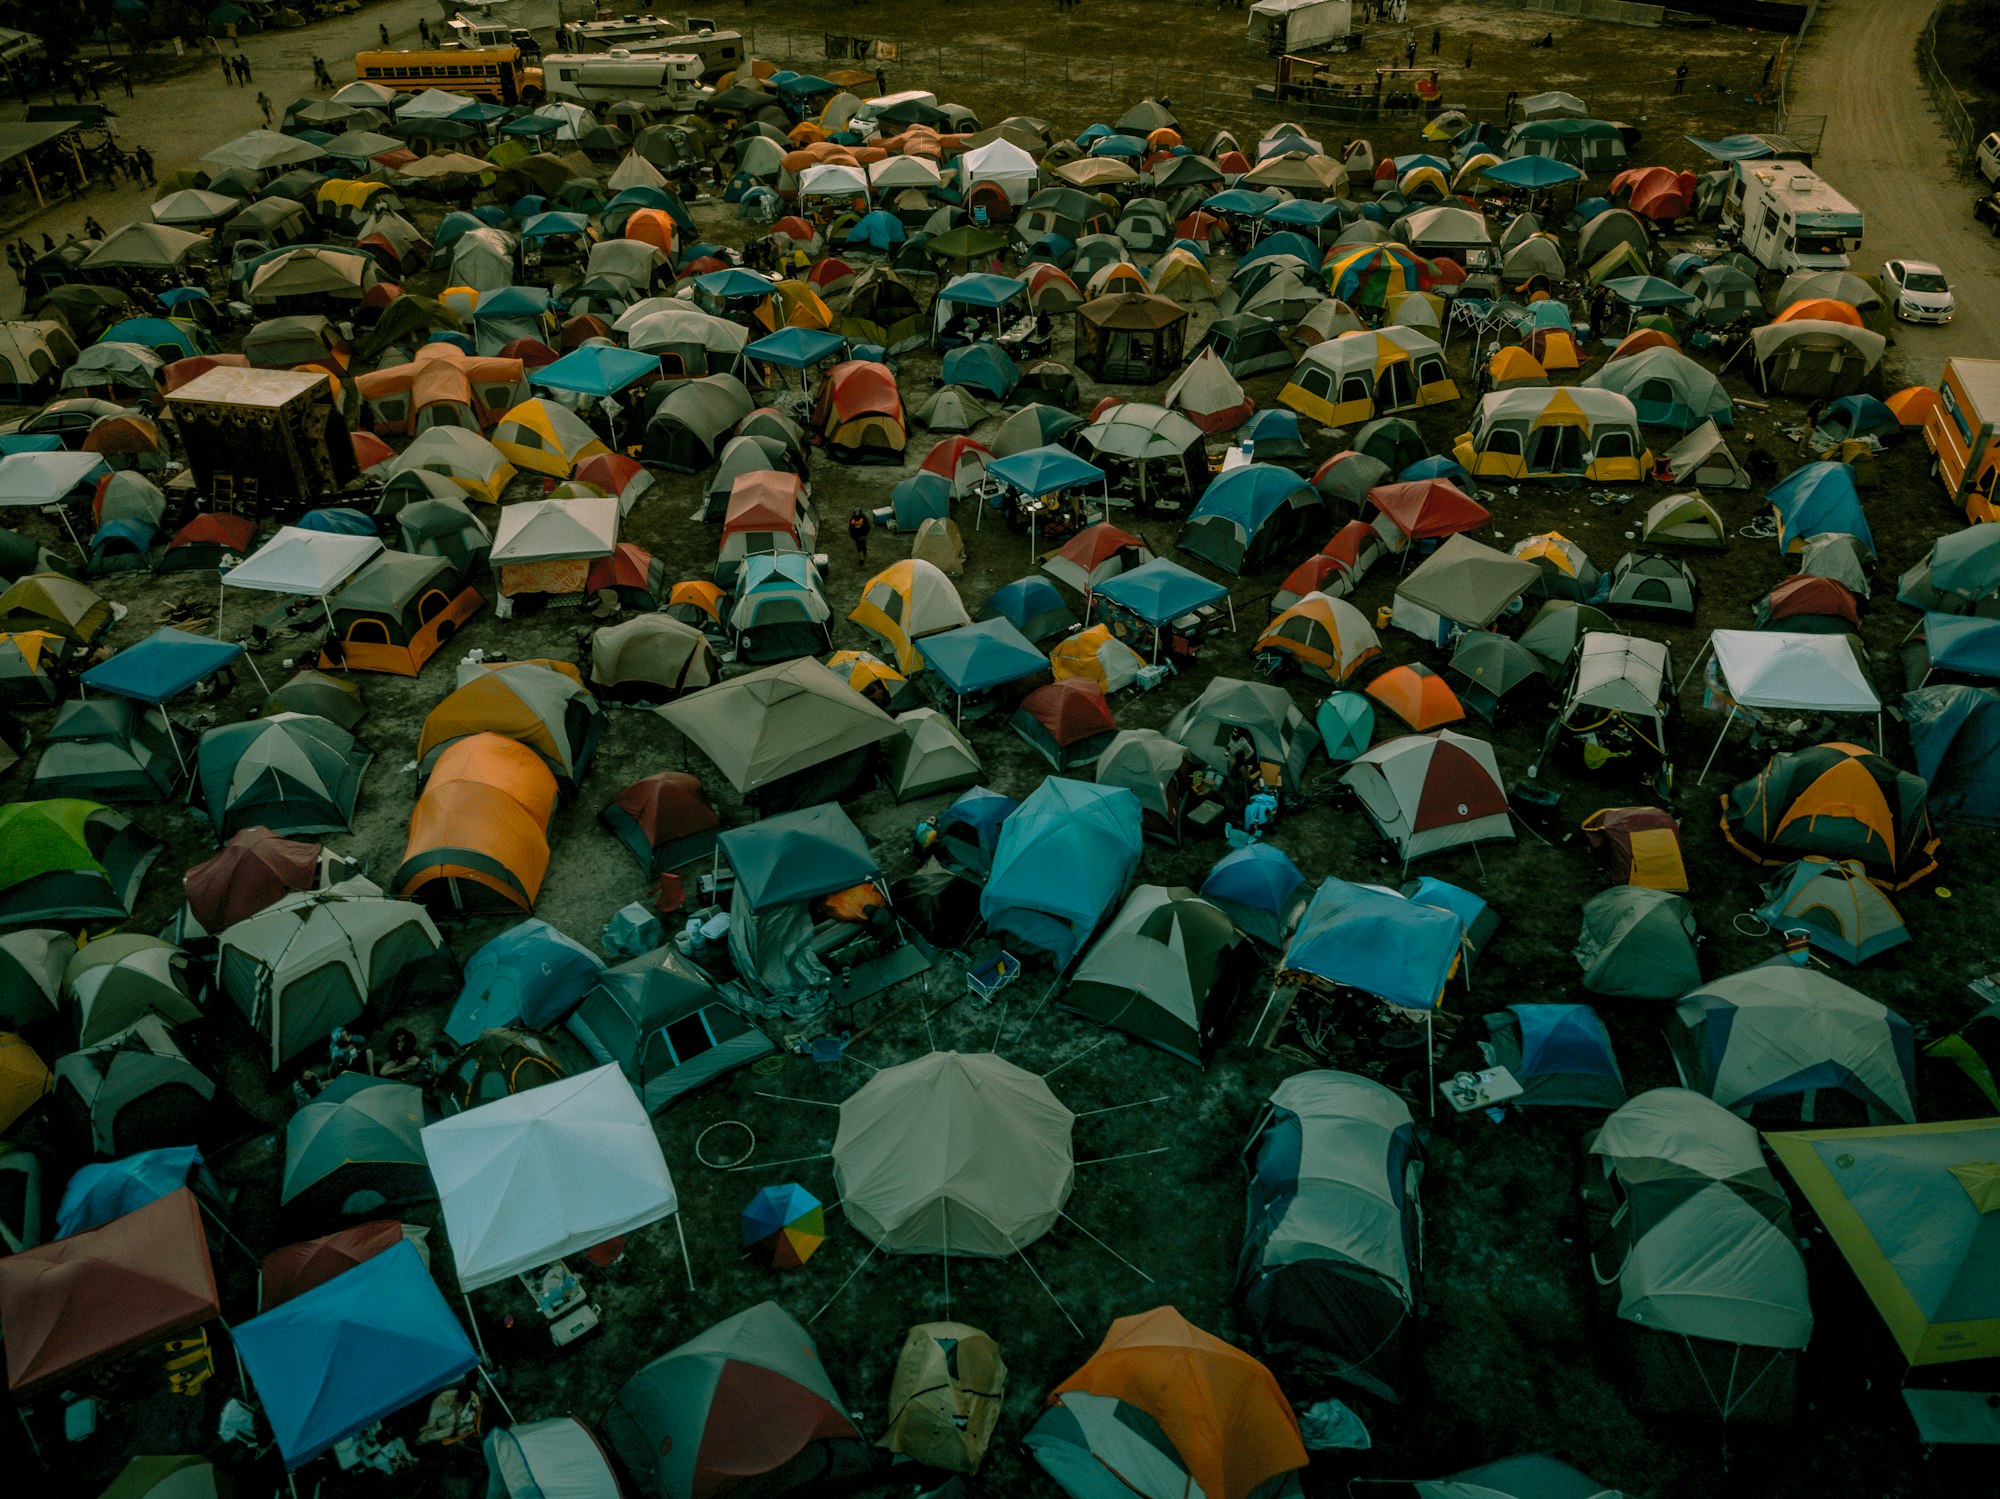 A campsite during a festival.